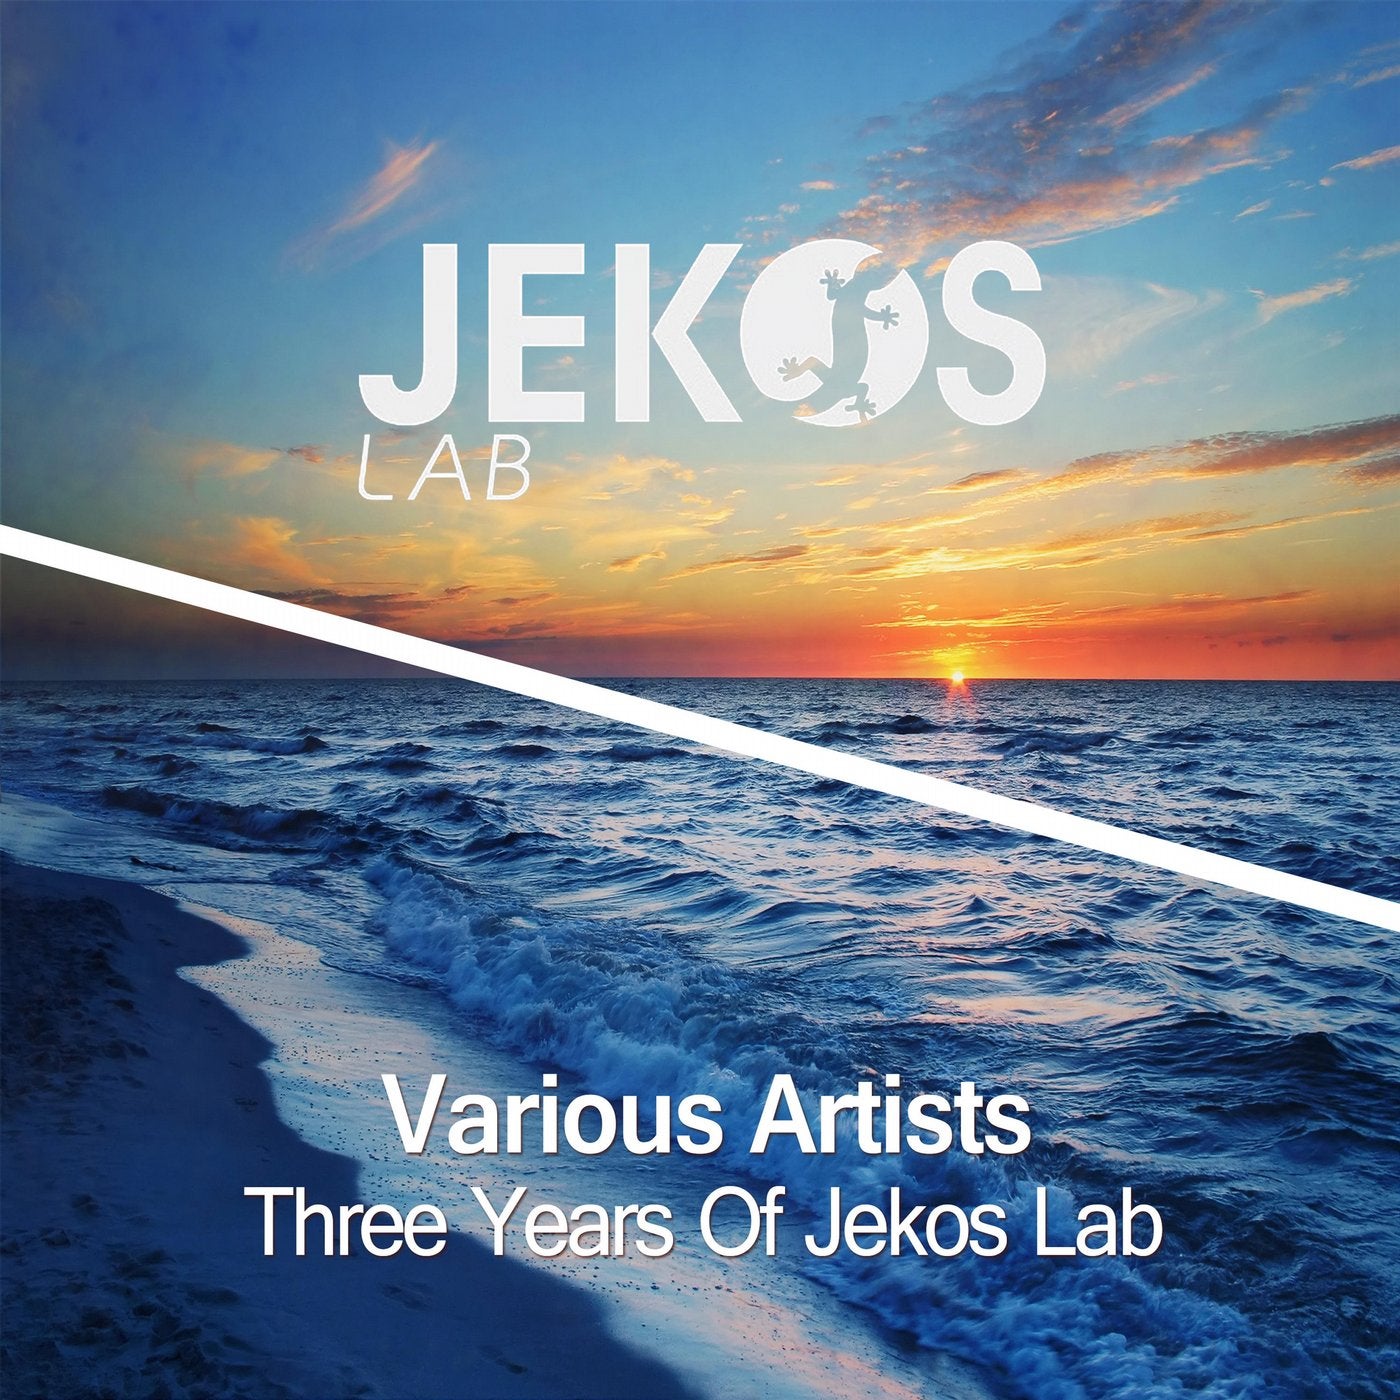 Three Years of Jekos Lab